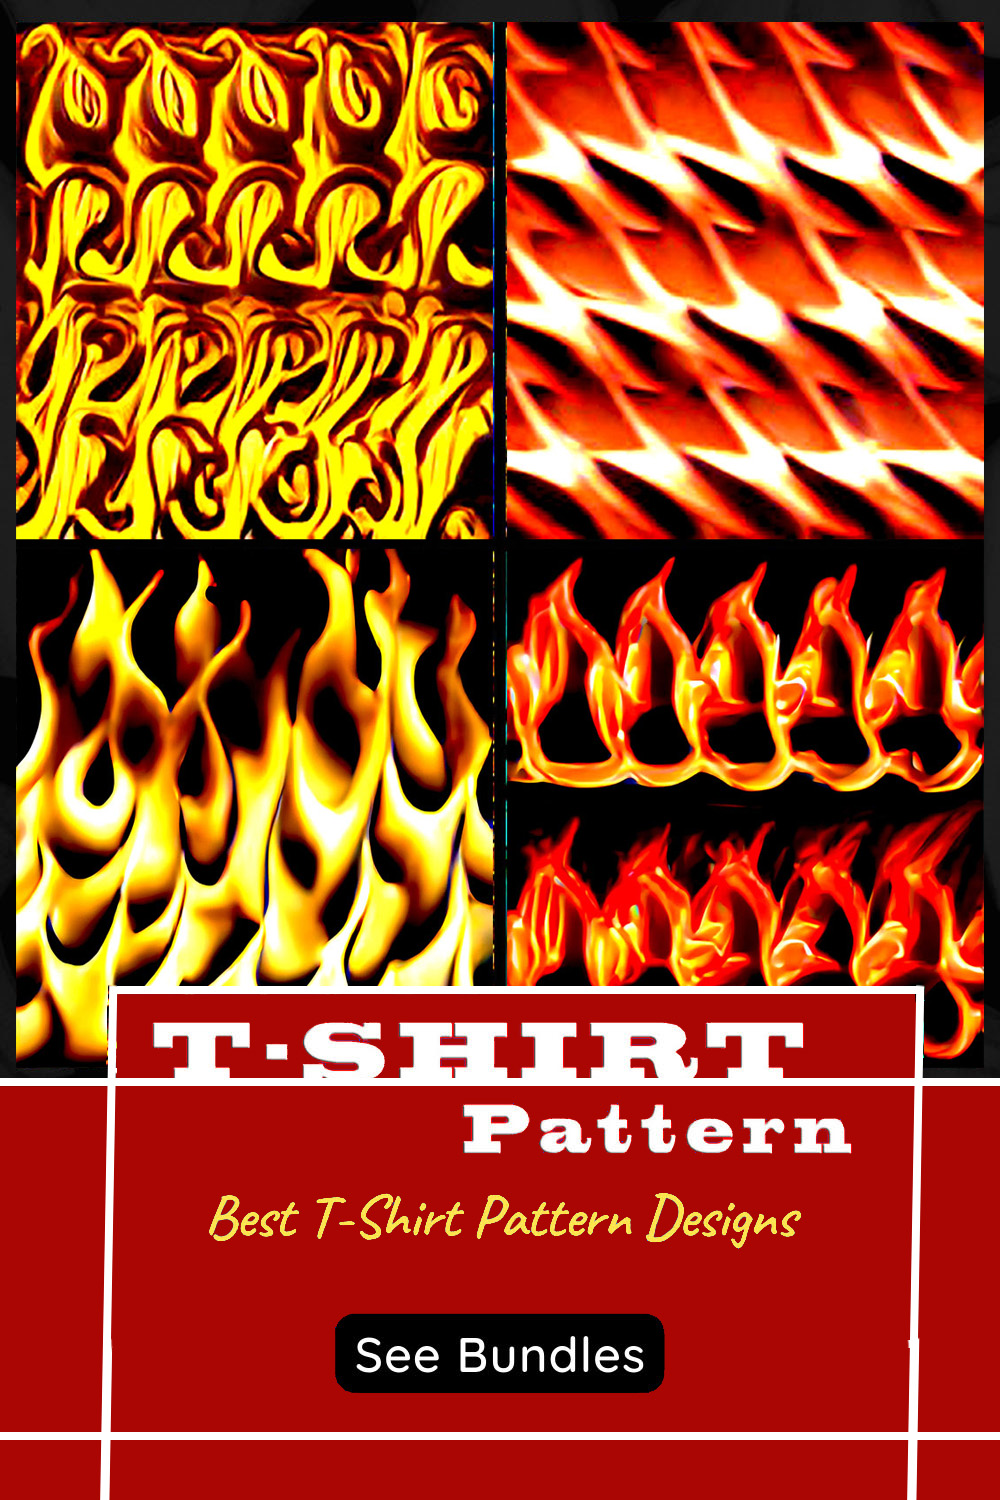 Beautiful Fire Patterns Design pinterest image.